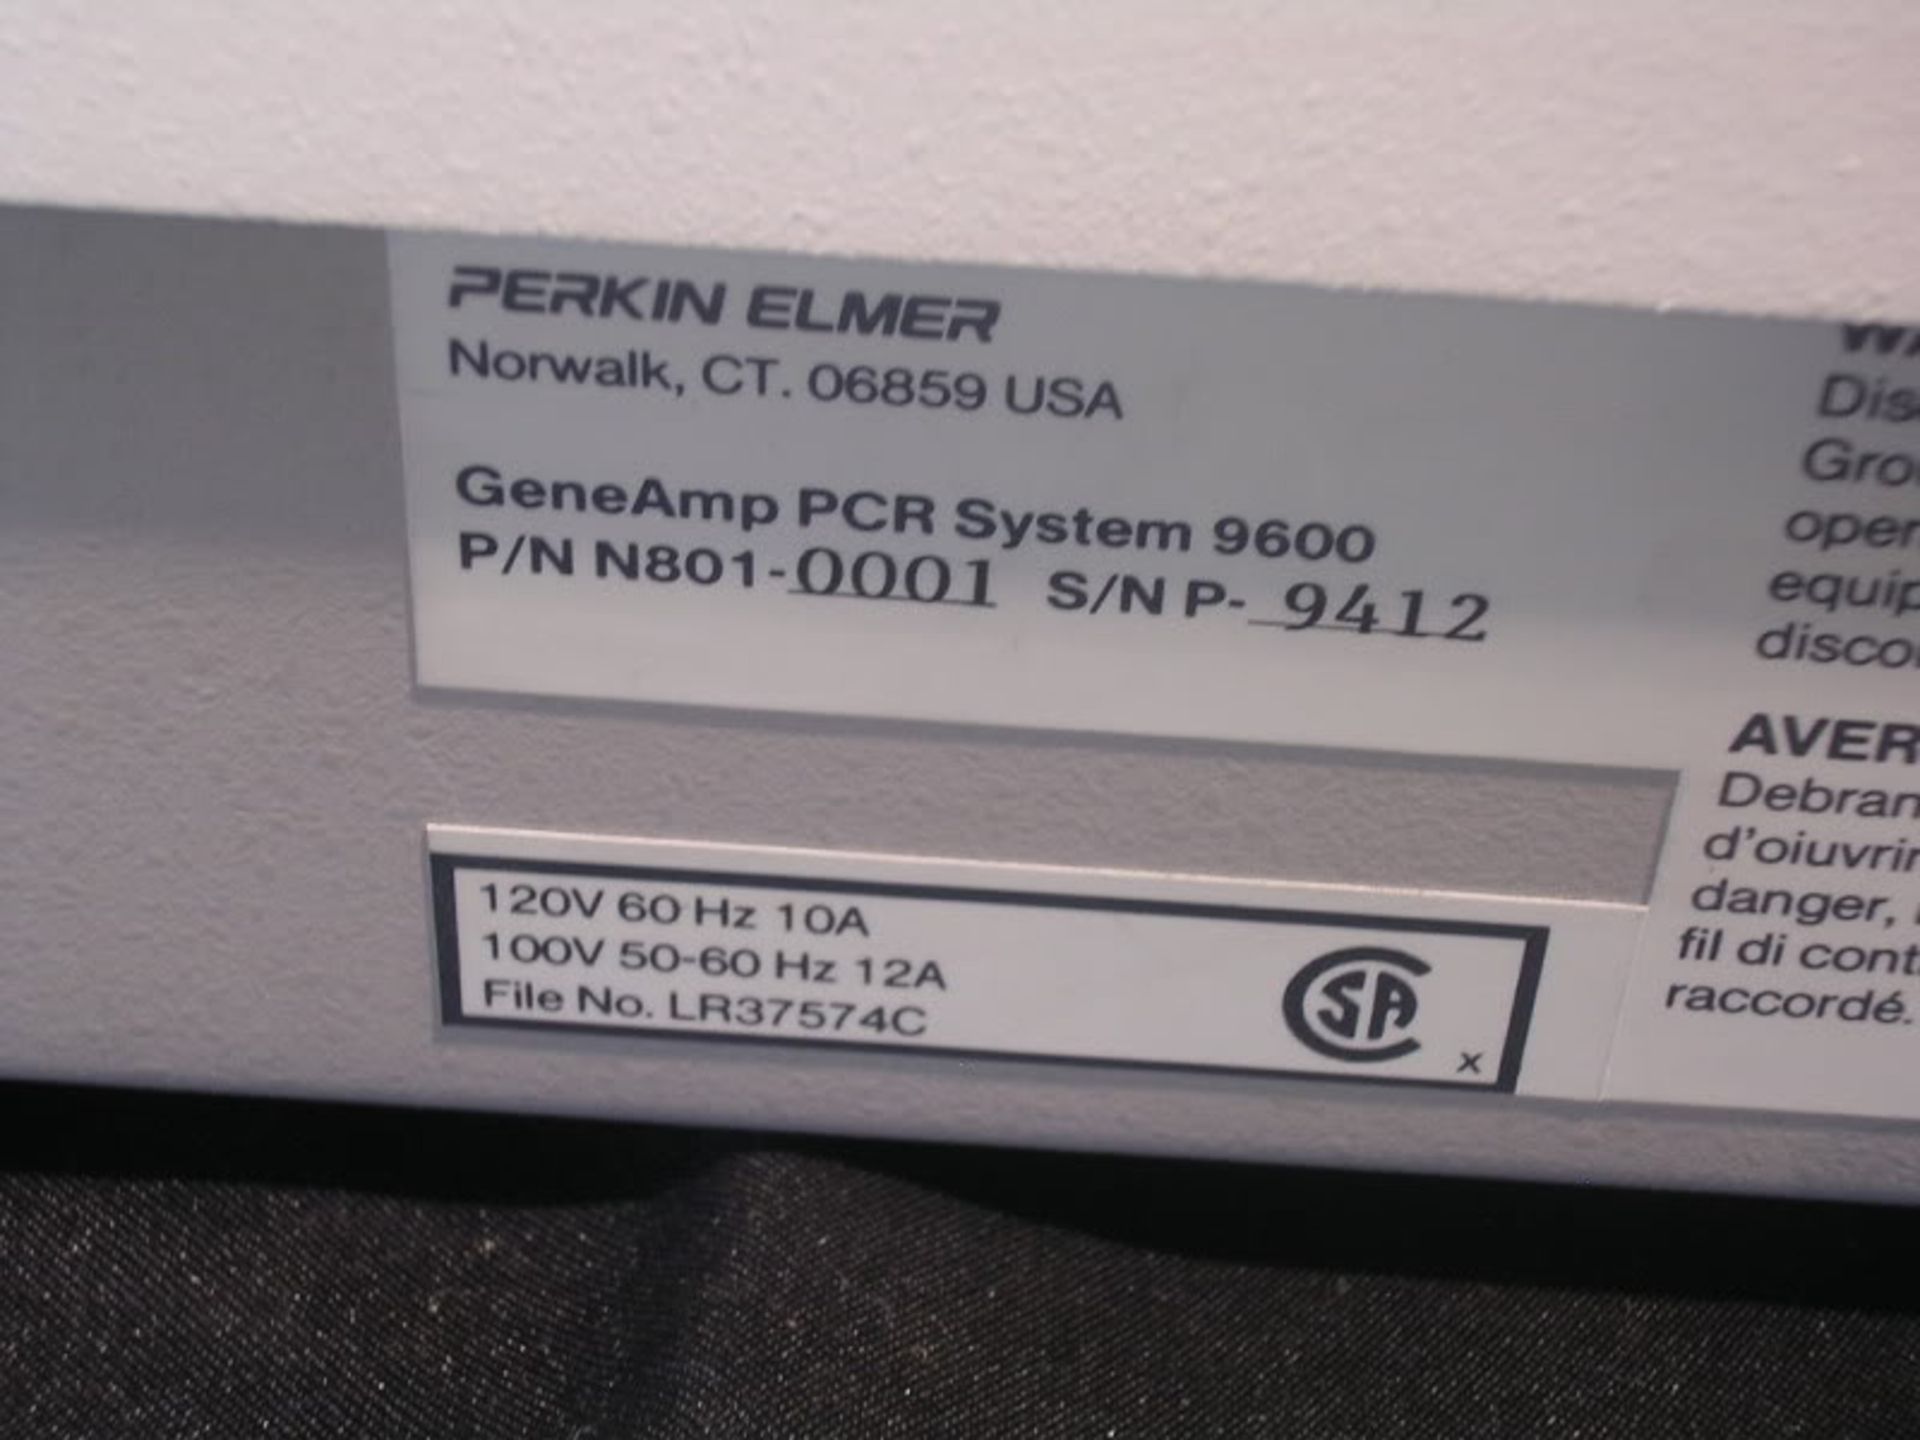 Perkin Elmer GeneAmp PCR System 9600, Qty 2, 321469034618 - Image 3 of 8